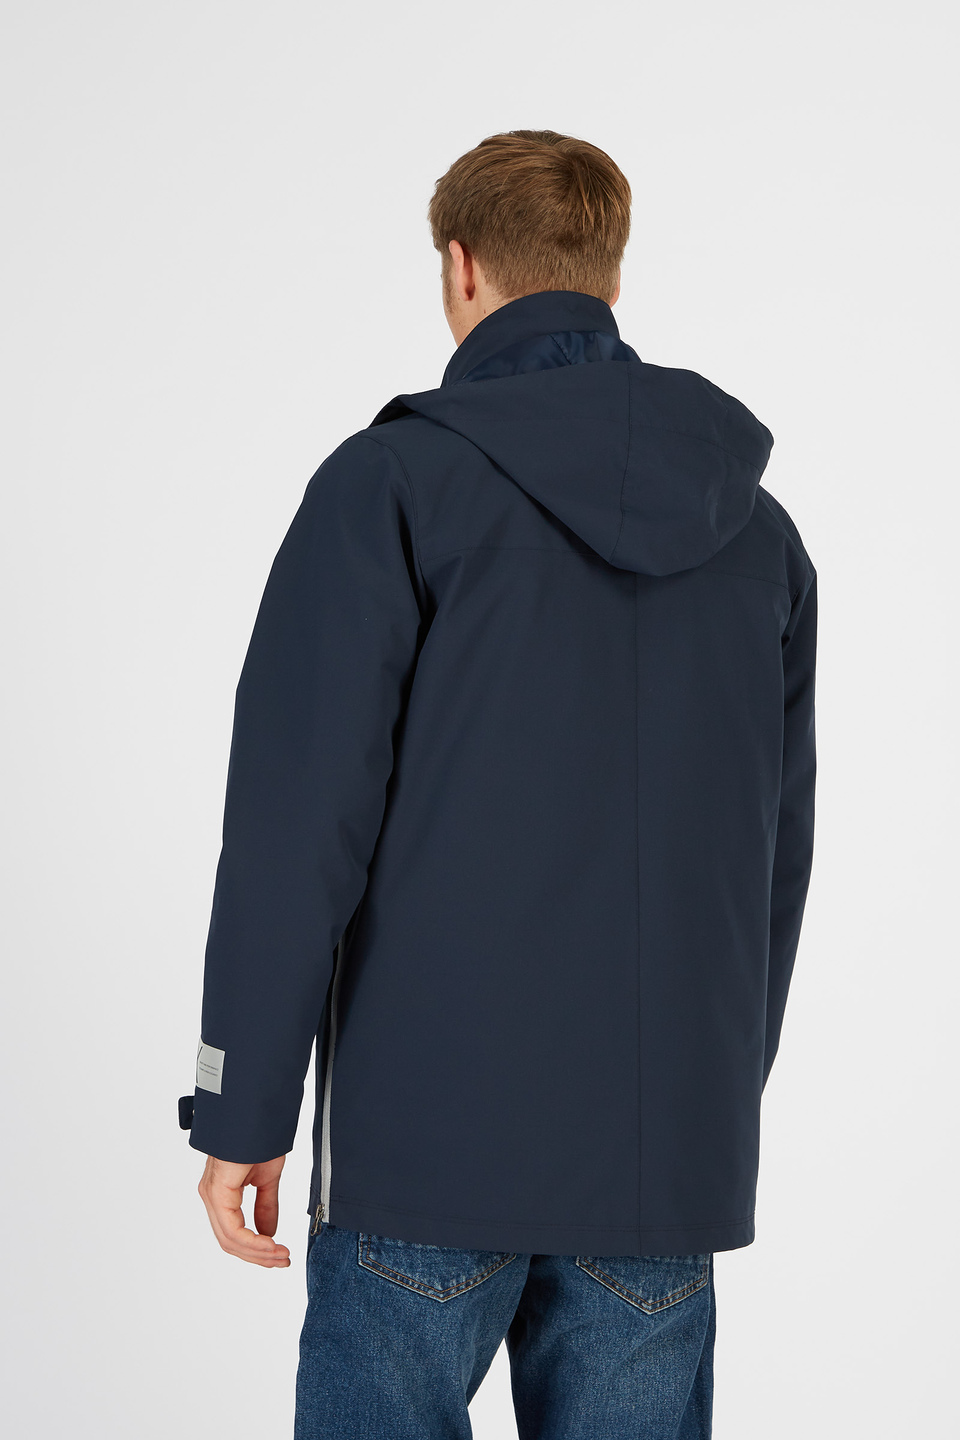 Pininfarina men’s long-sleeved jacket in 100% regular fit cotton | La Martina - Official Online Shop